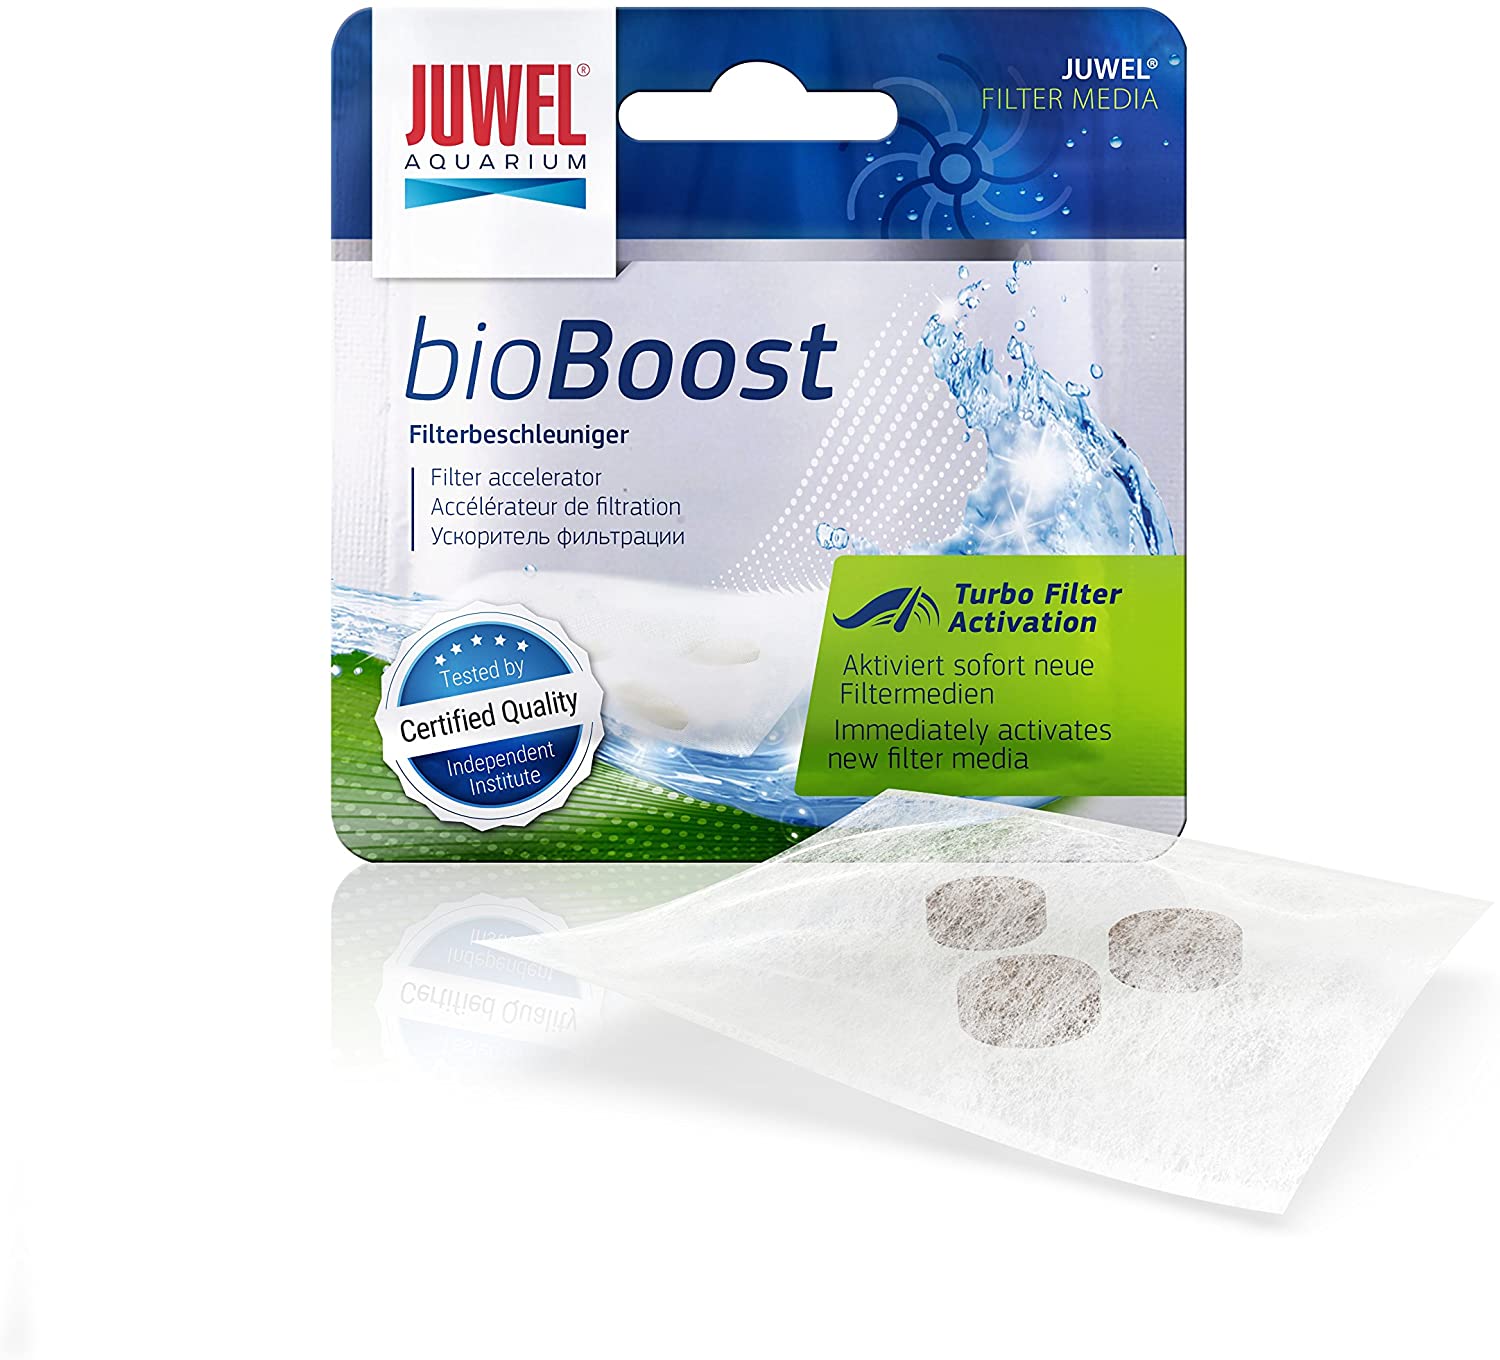 Juwel bioBoost - filter accelerator